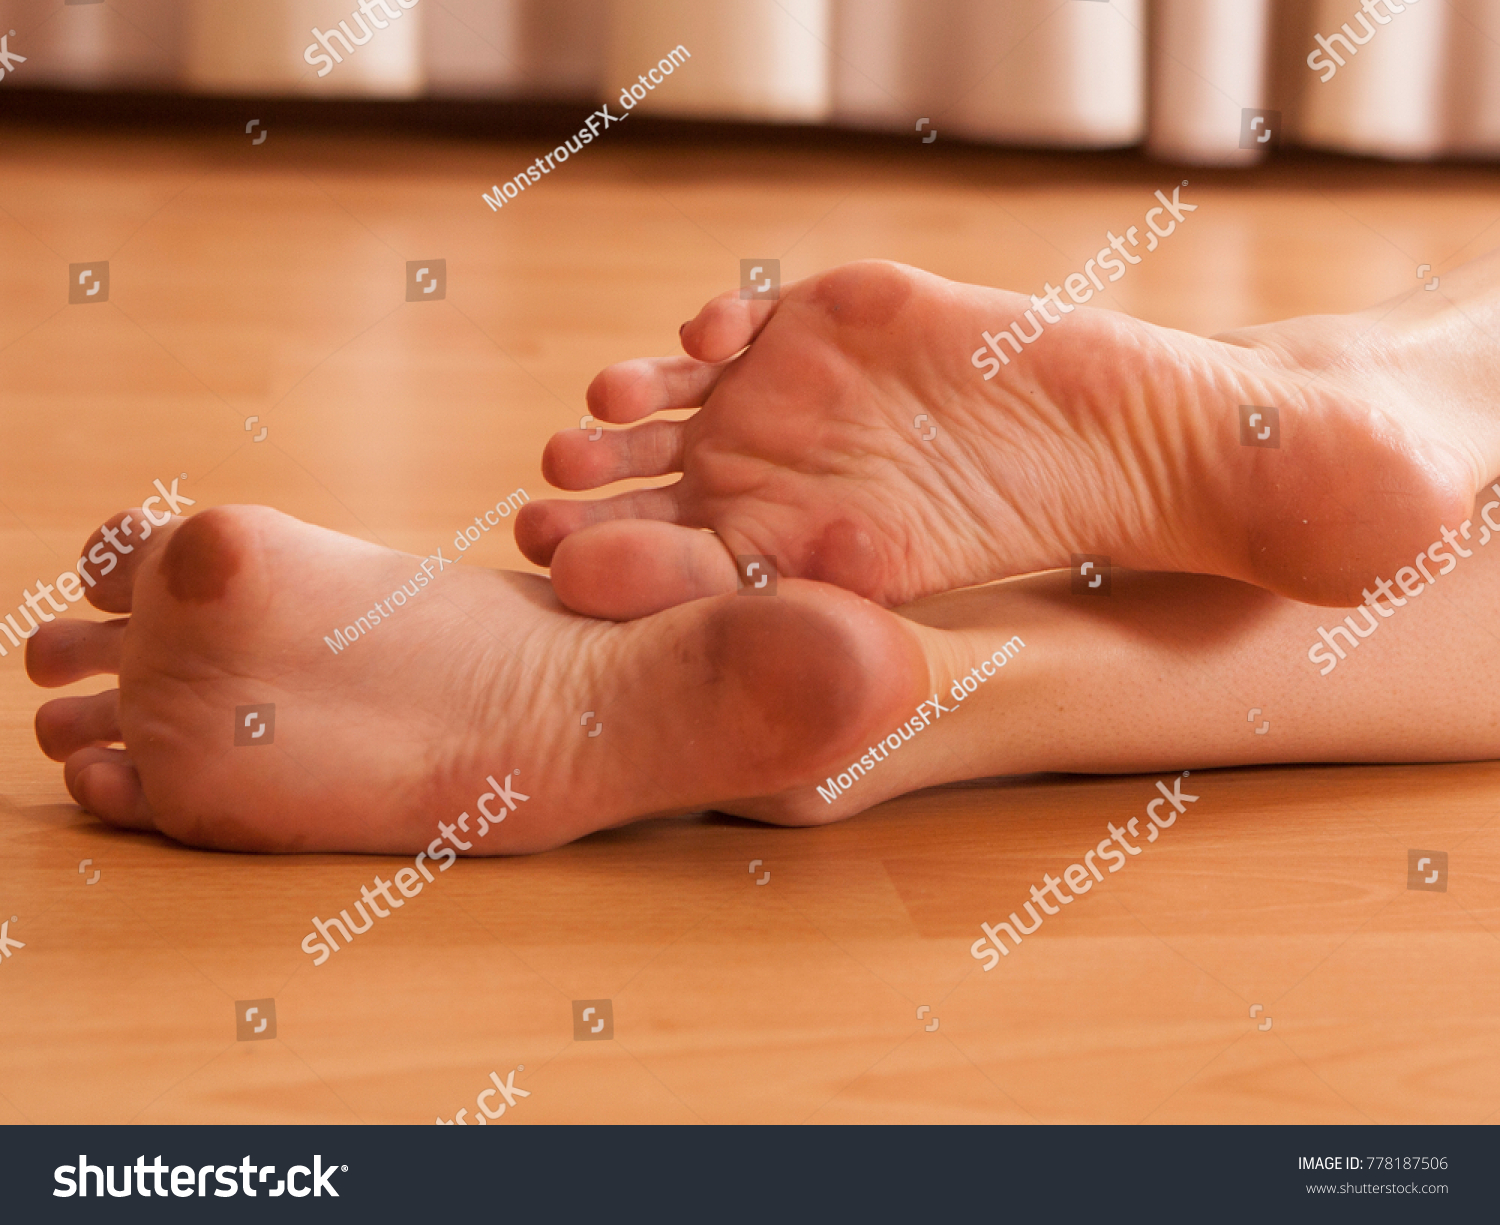 andrew mabbitt recommends mature nylon feet tumblr pic